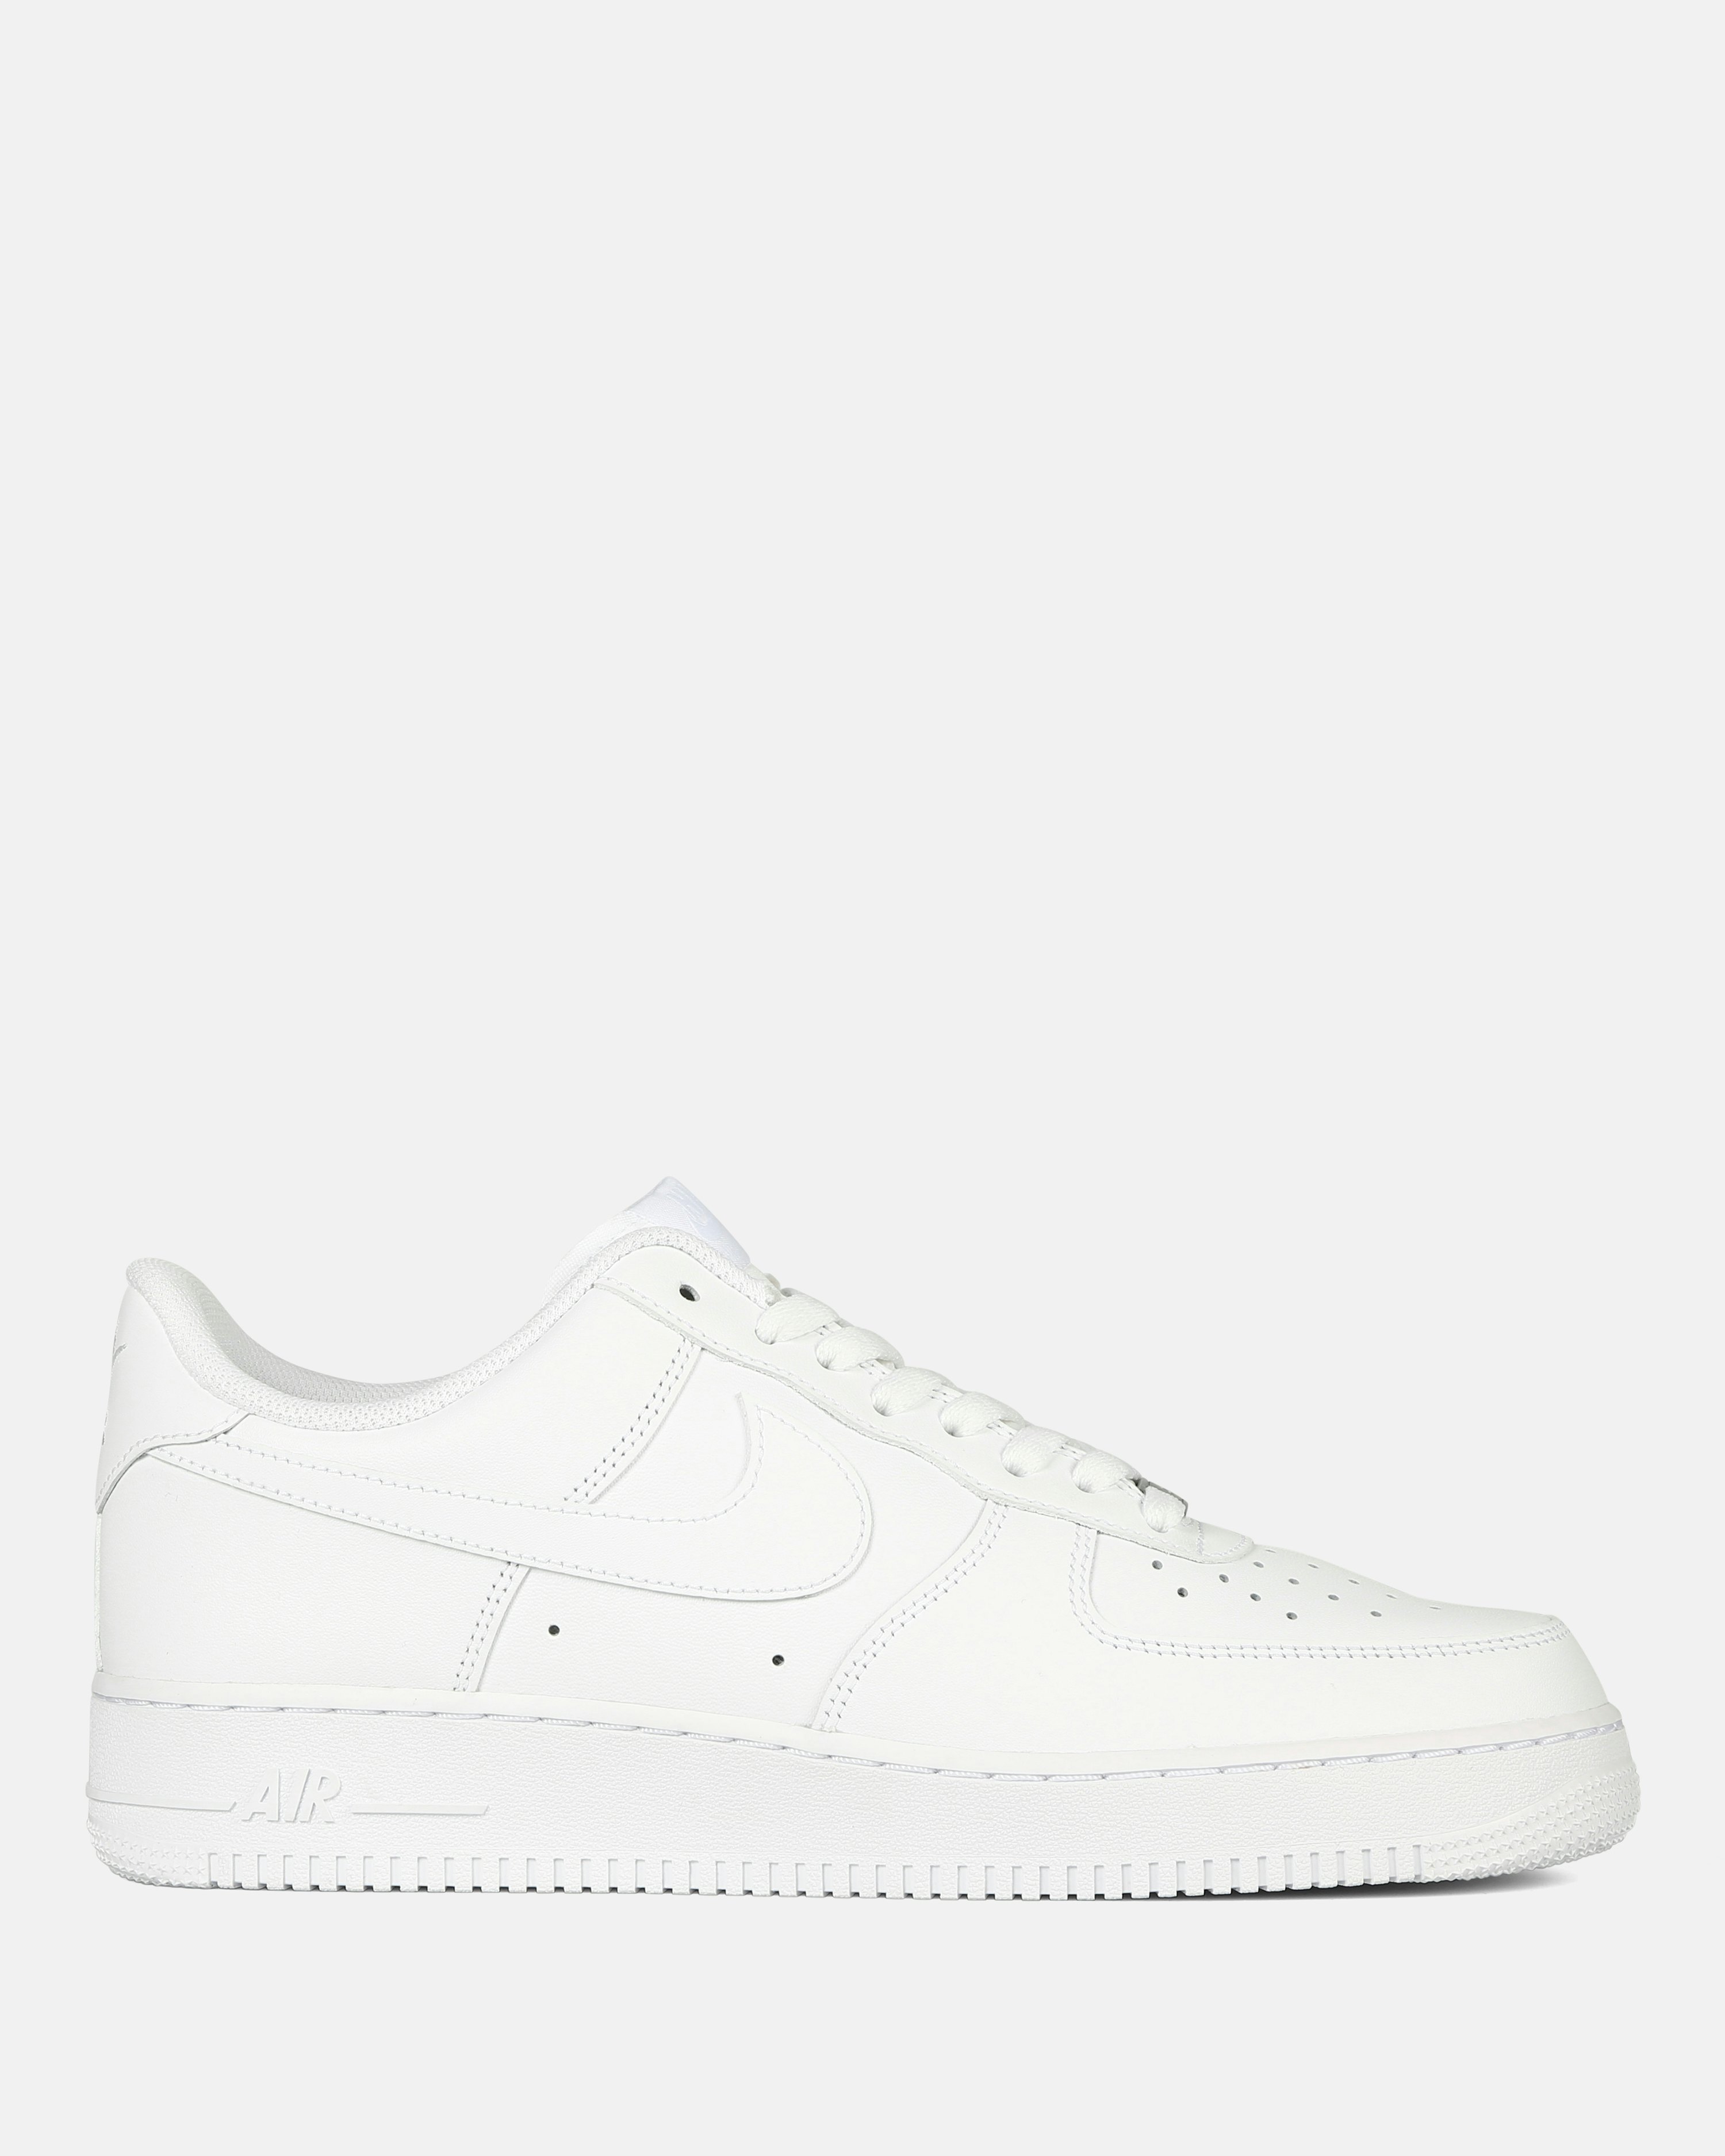 Nike Air Force 1 Shoes White, Men